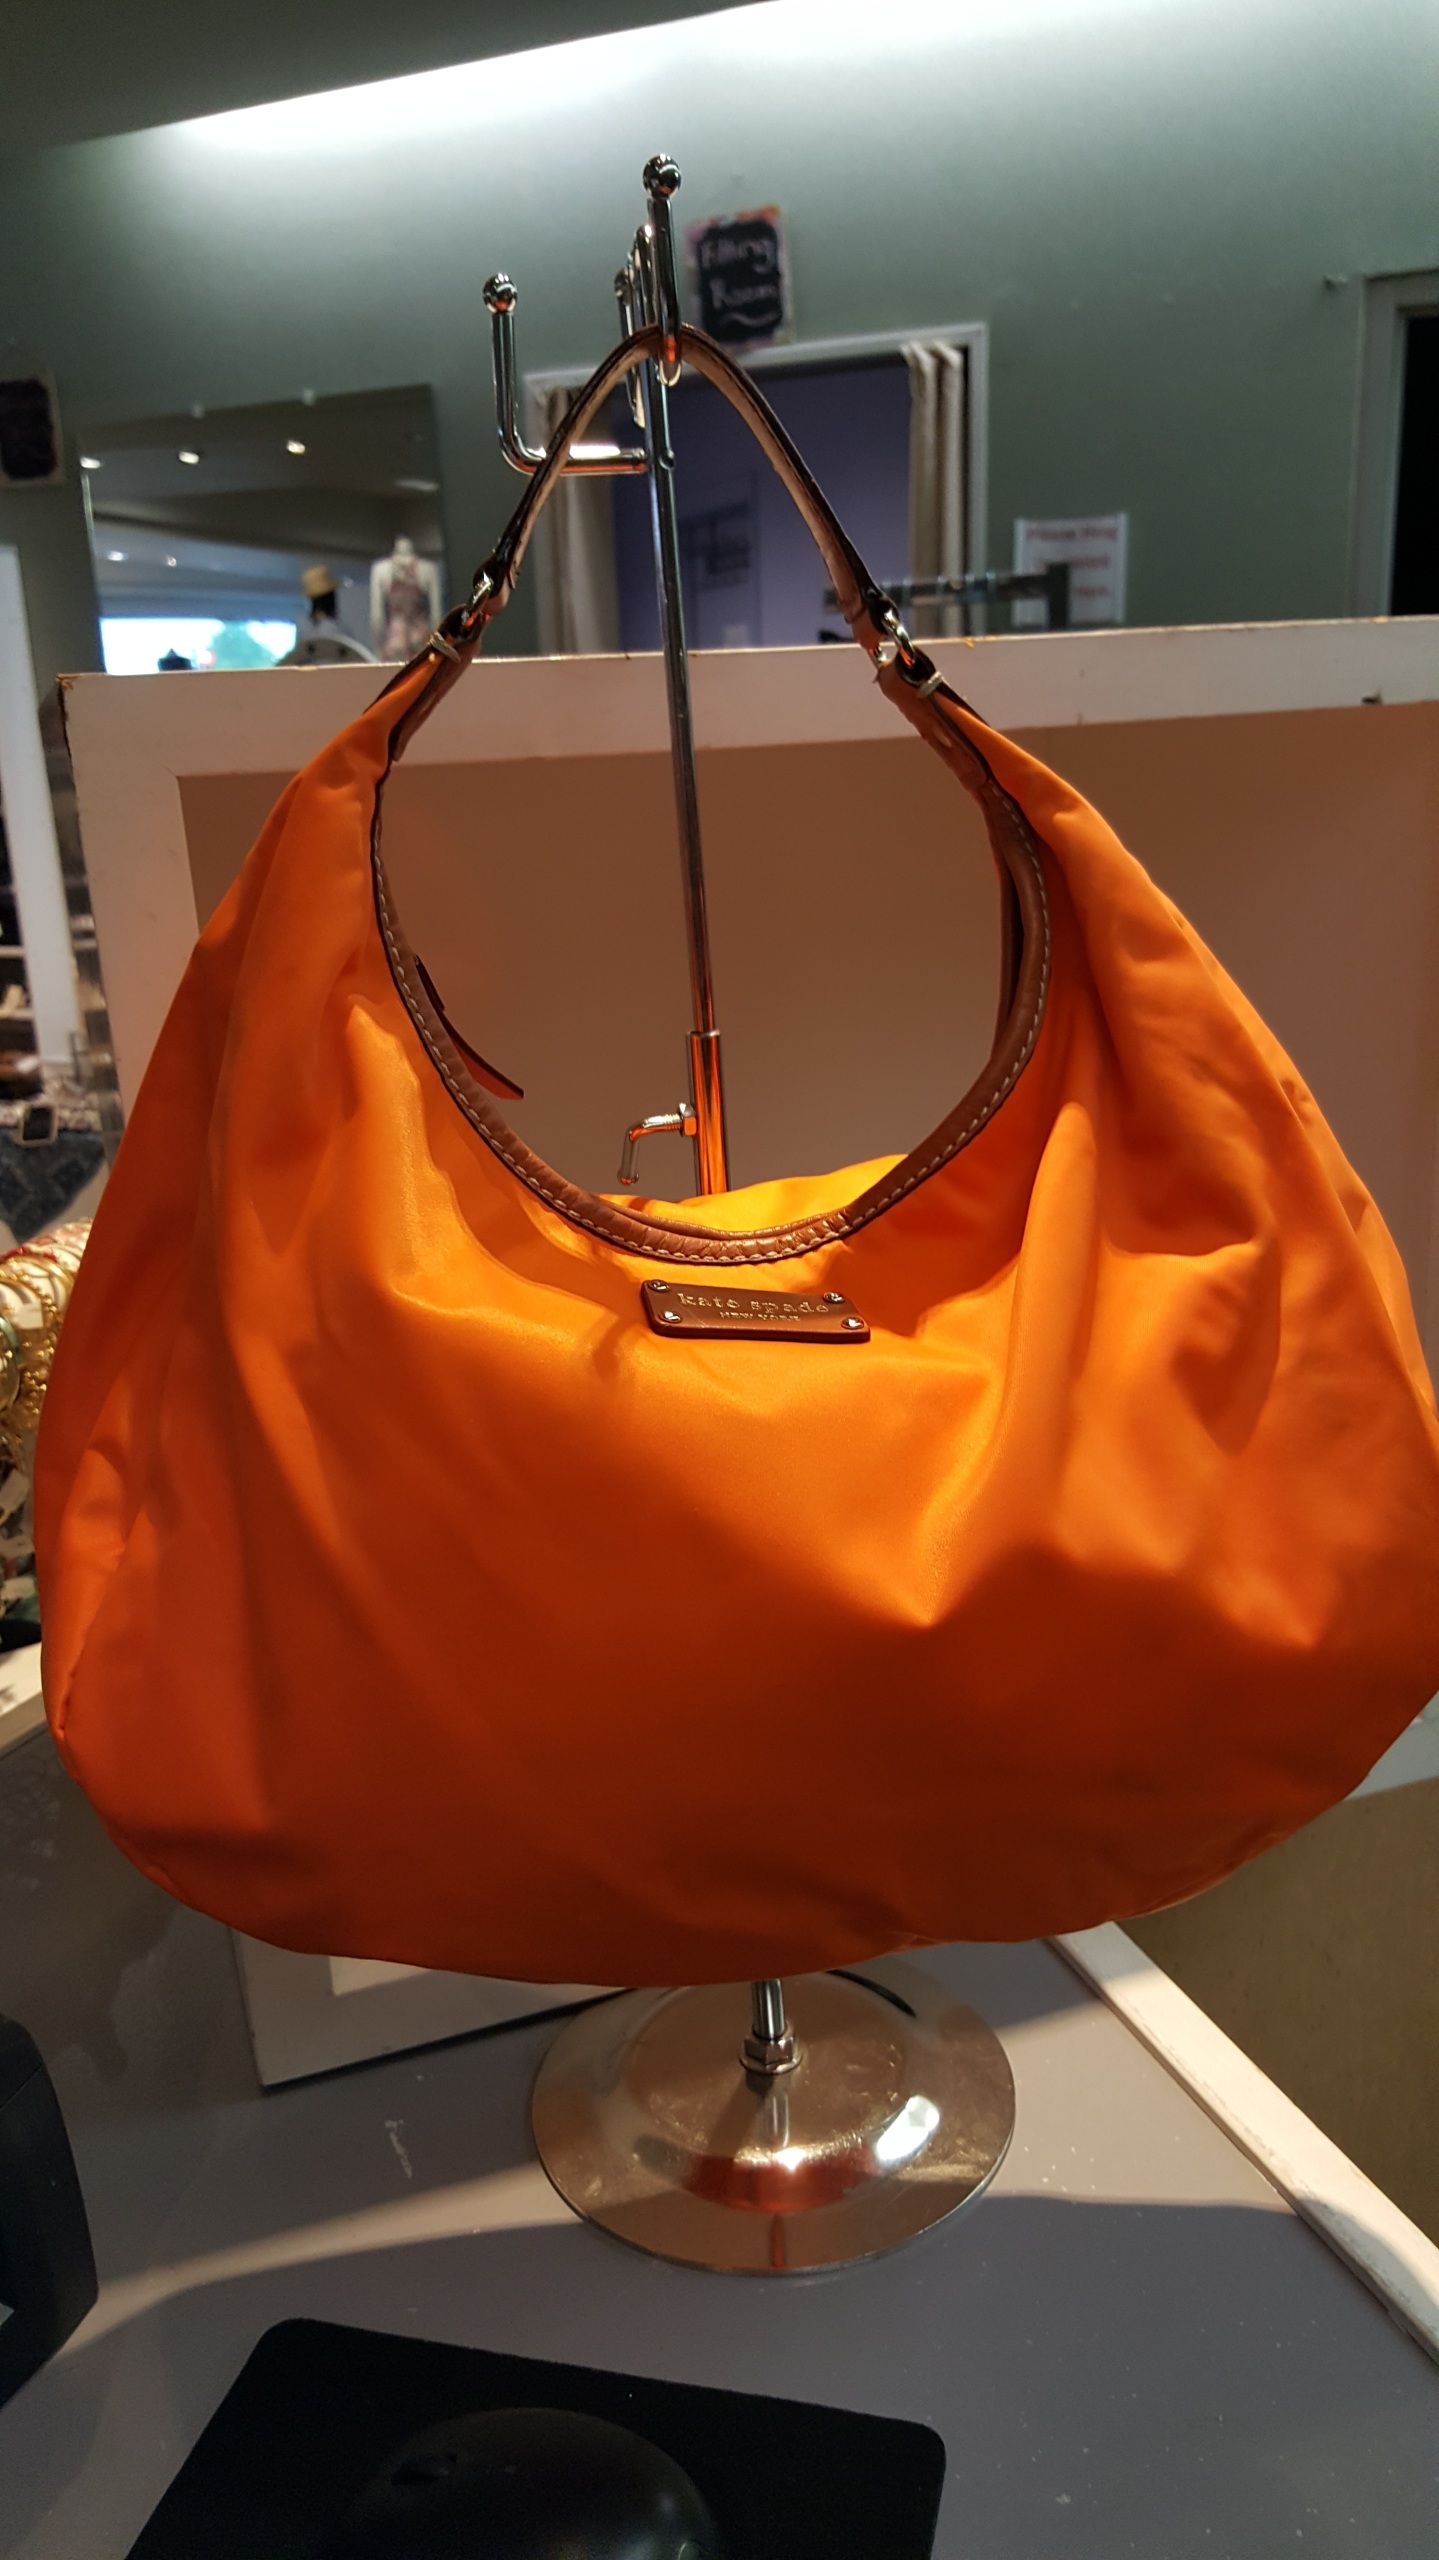 ZIBUYU Tote Handbag for Women Fashion Faux Leather Tote Bag Classic Shoulder  Crossbody Bags for Lady Girl Solid Color Brown, चमड़ा का टोटे वाला बैग -  Eleboat, Gurugram | ID: 2850183648673